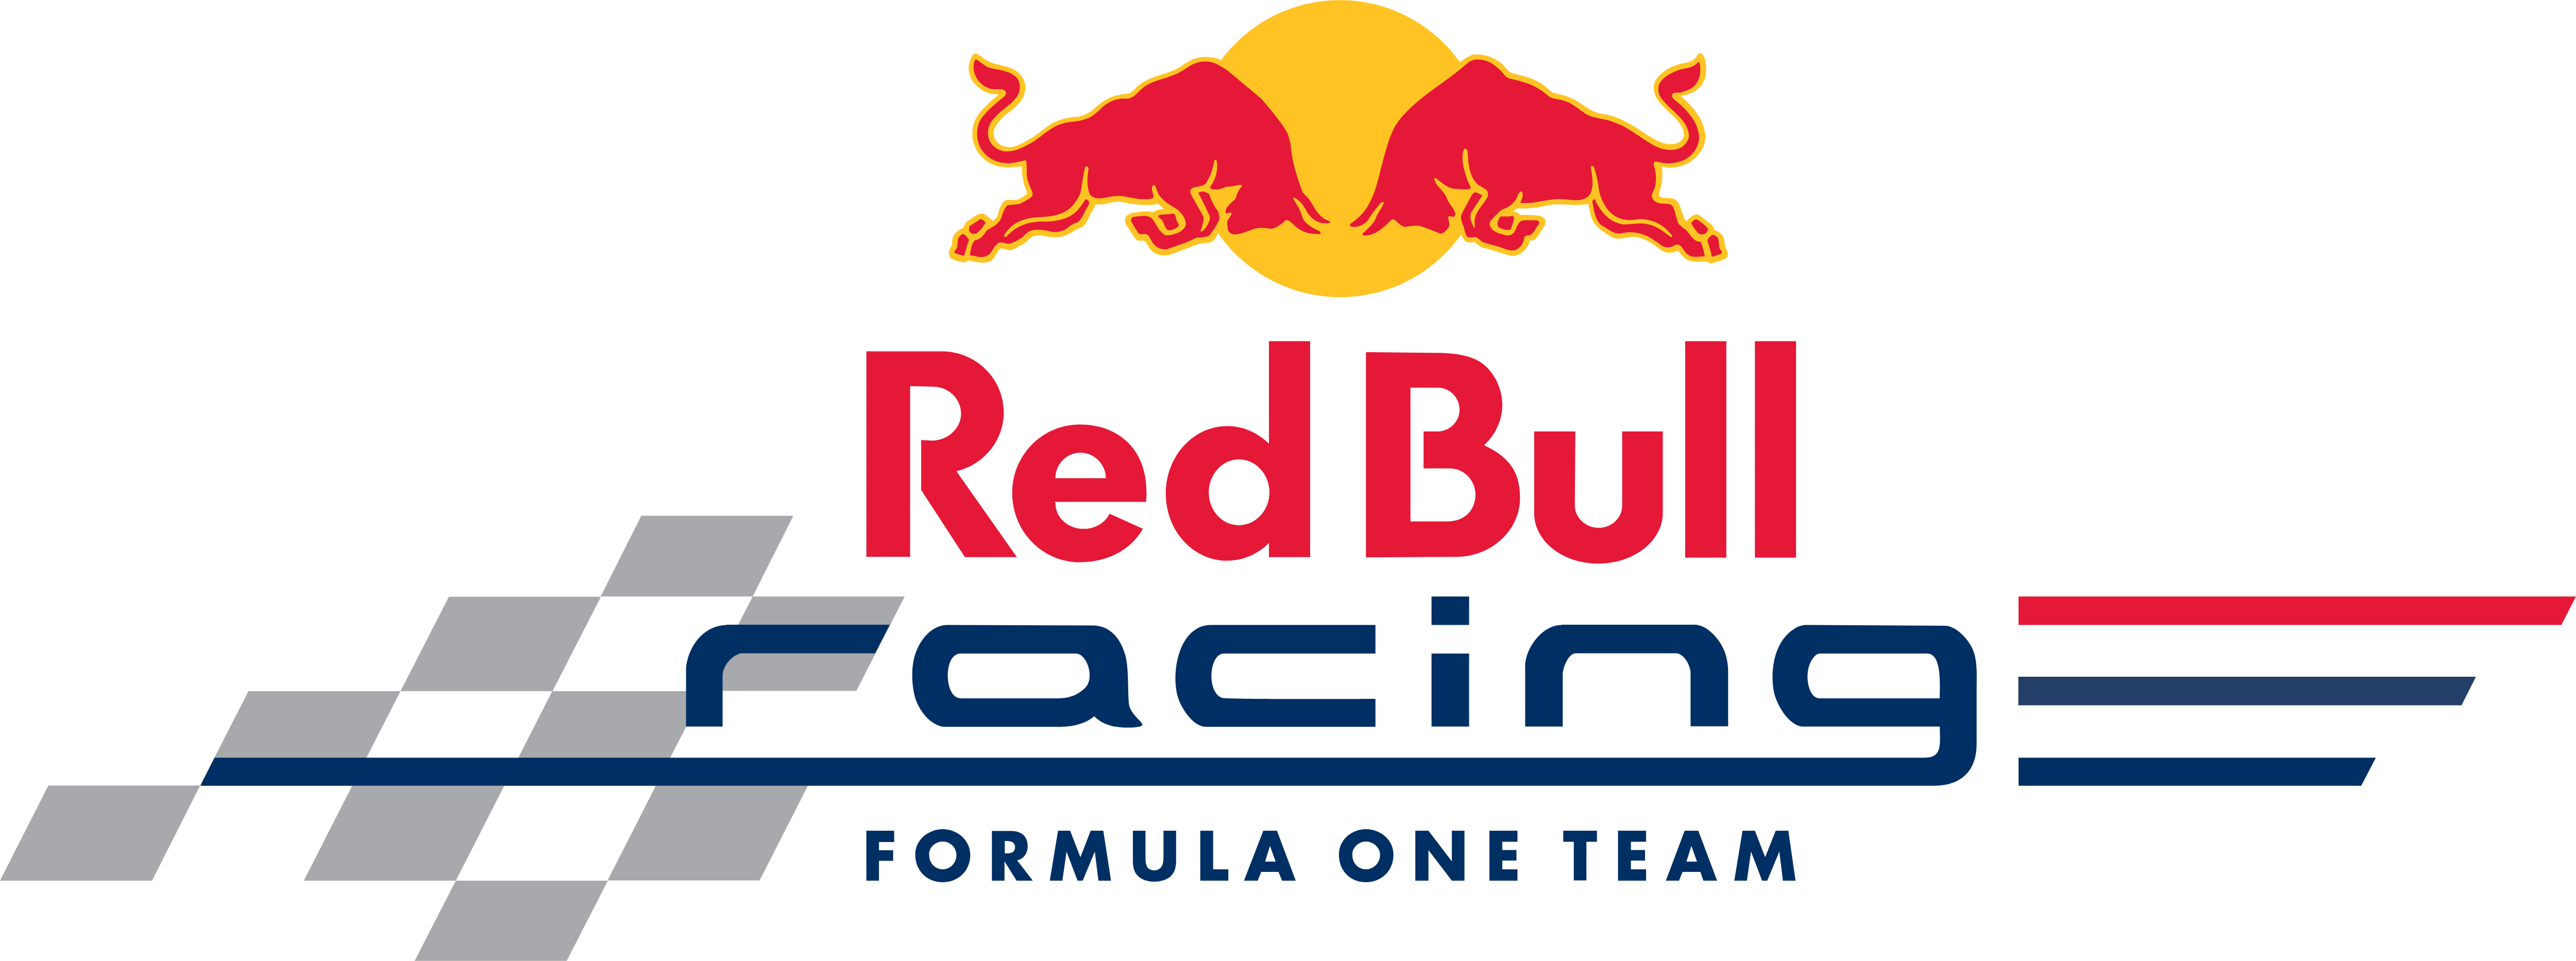 Red Bull Sport Logos Download Clemson Football Team - Red Bull Formula 1 Logo (5000x1866)